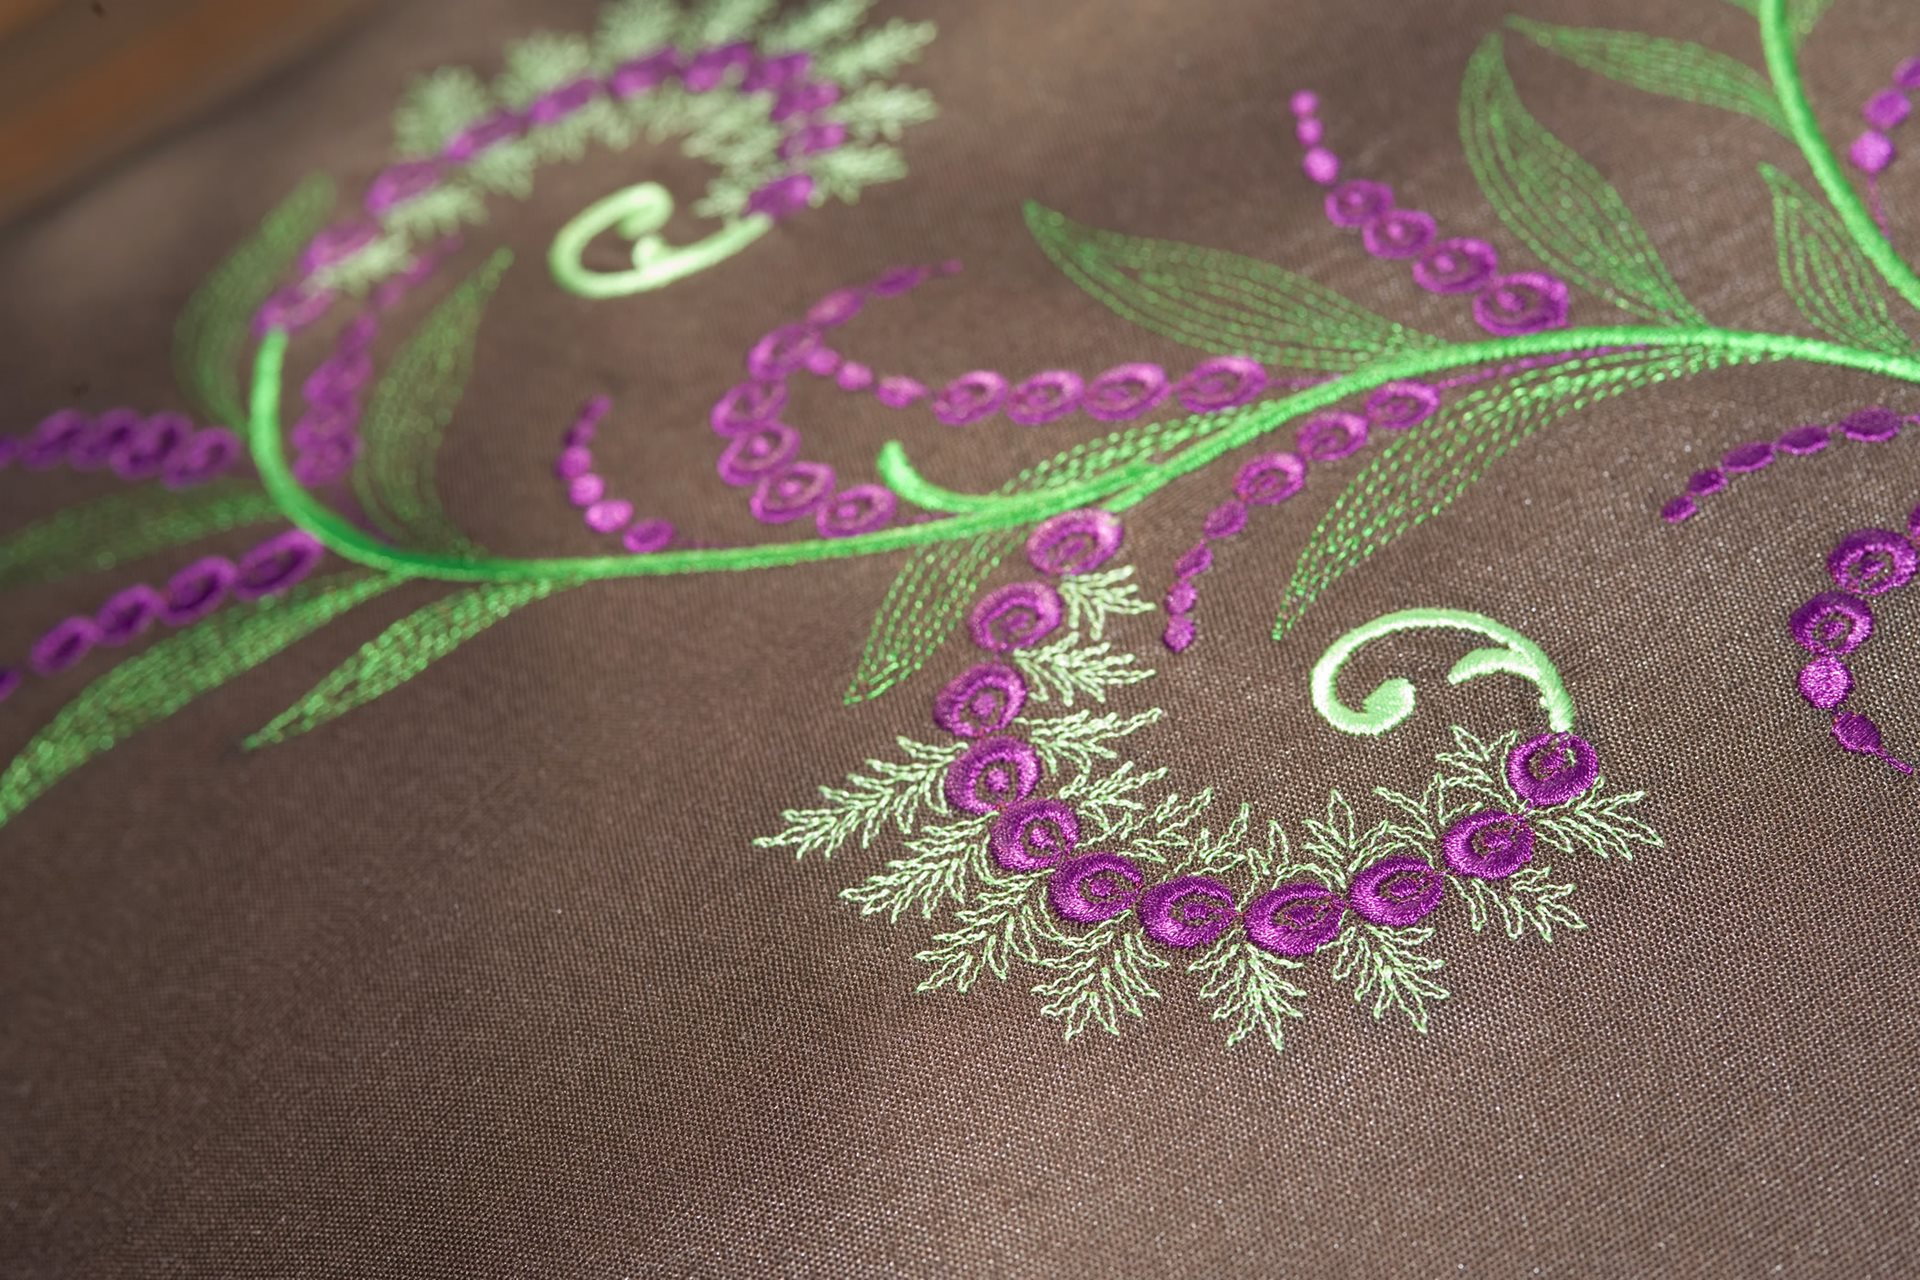 Embroidery Machine Patterns Designs Free Downloads Embroidery Designs Patterns Other Freebies Bernina